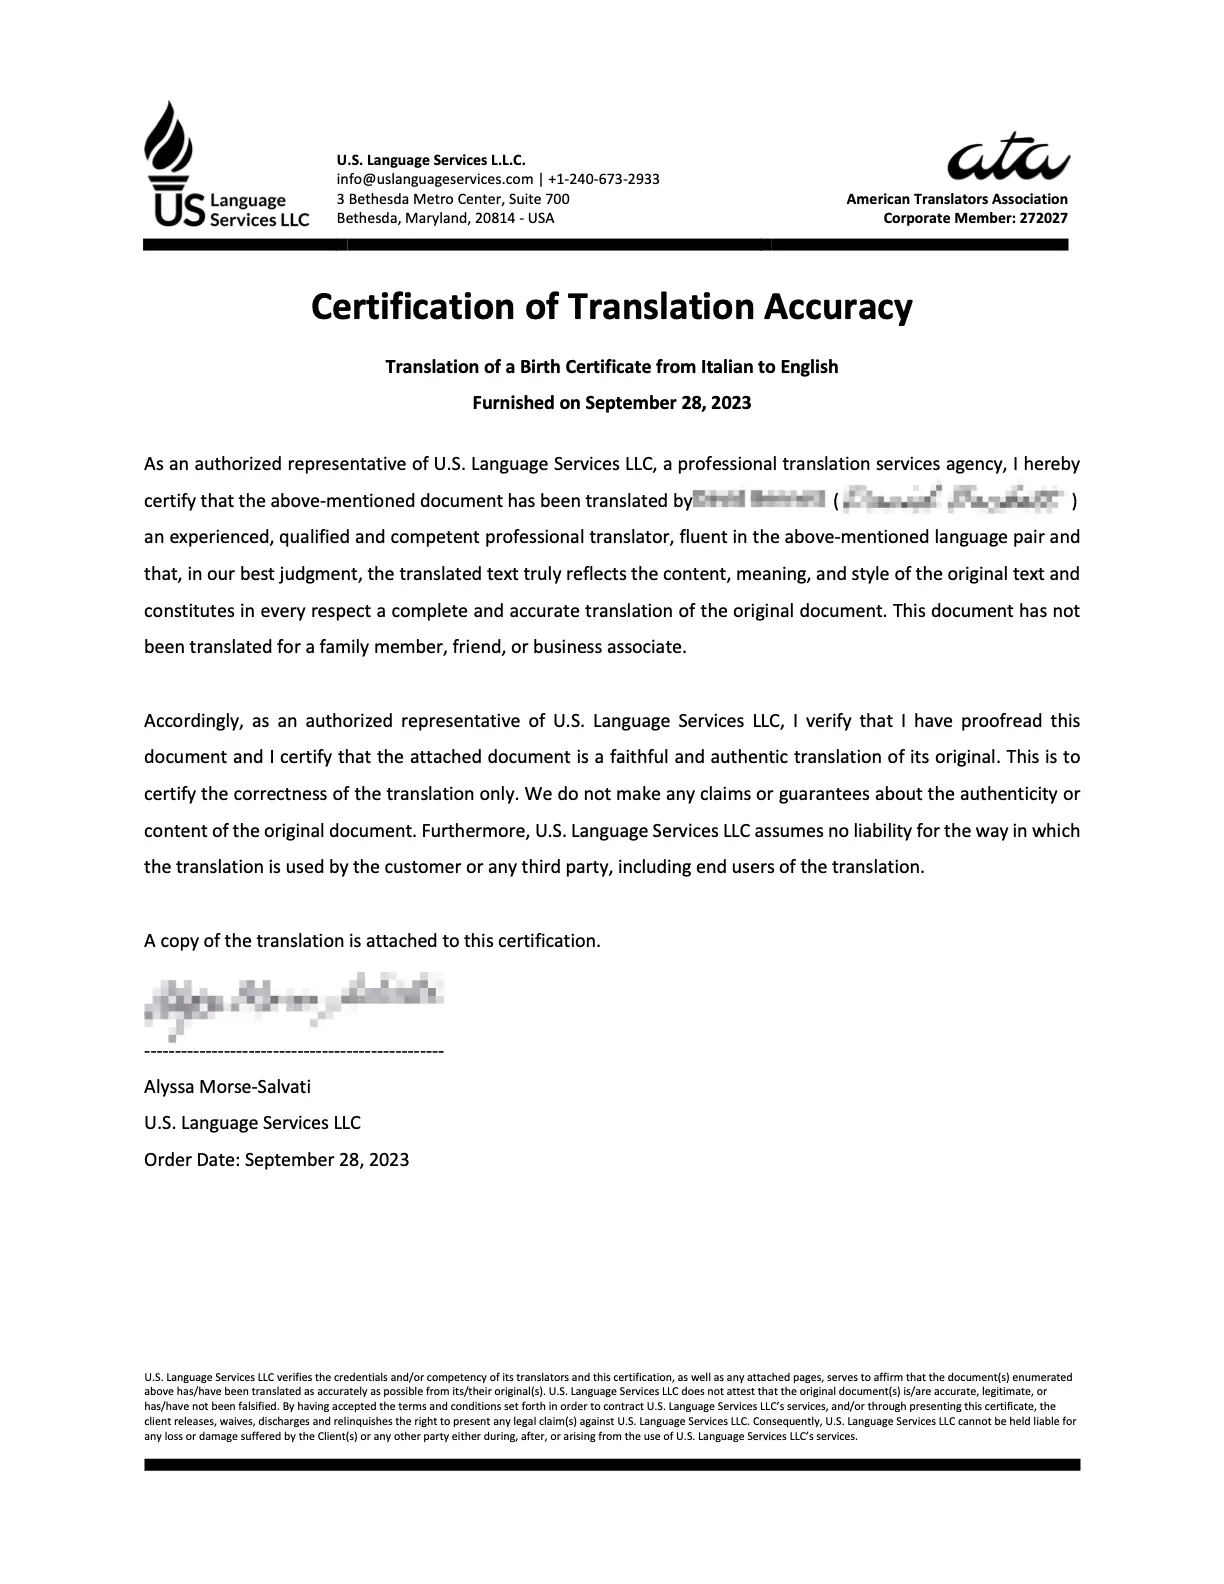 Certified Italian to English translation - Certificate Sample